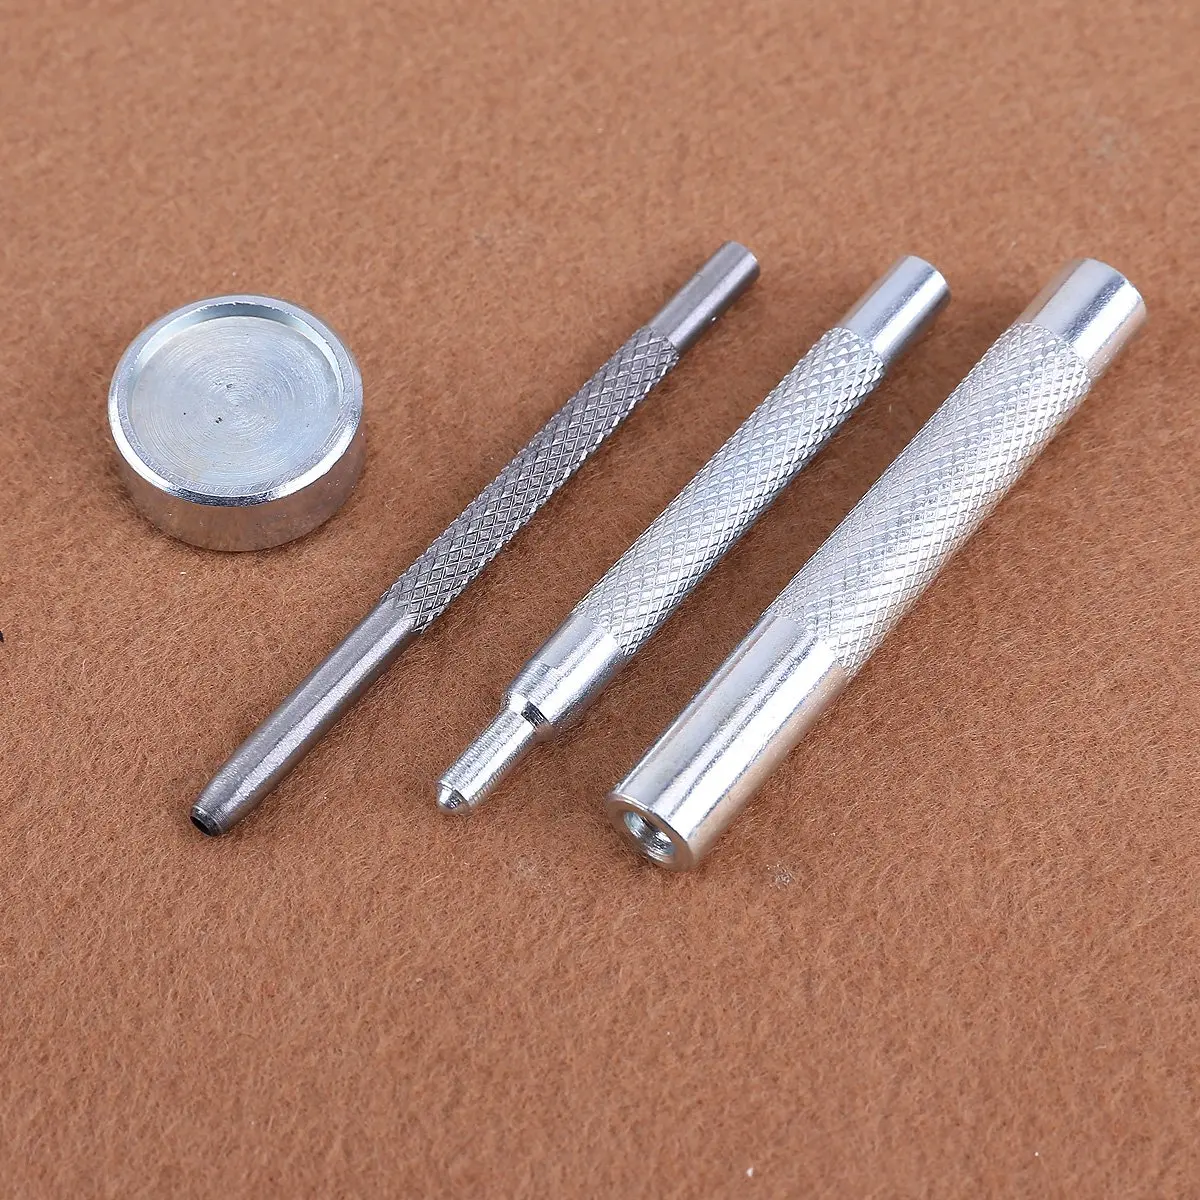 25 шт серебро+ 25 шт бронза 15 мм Кнопки Металл+ набор инструментов для кожгалантереи кожа